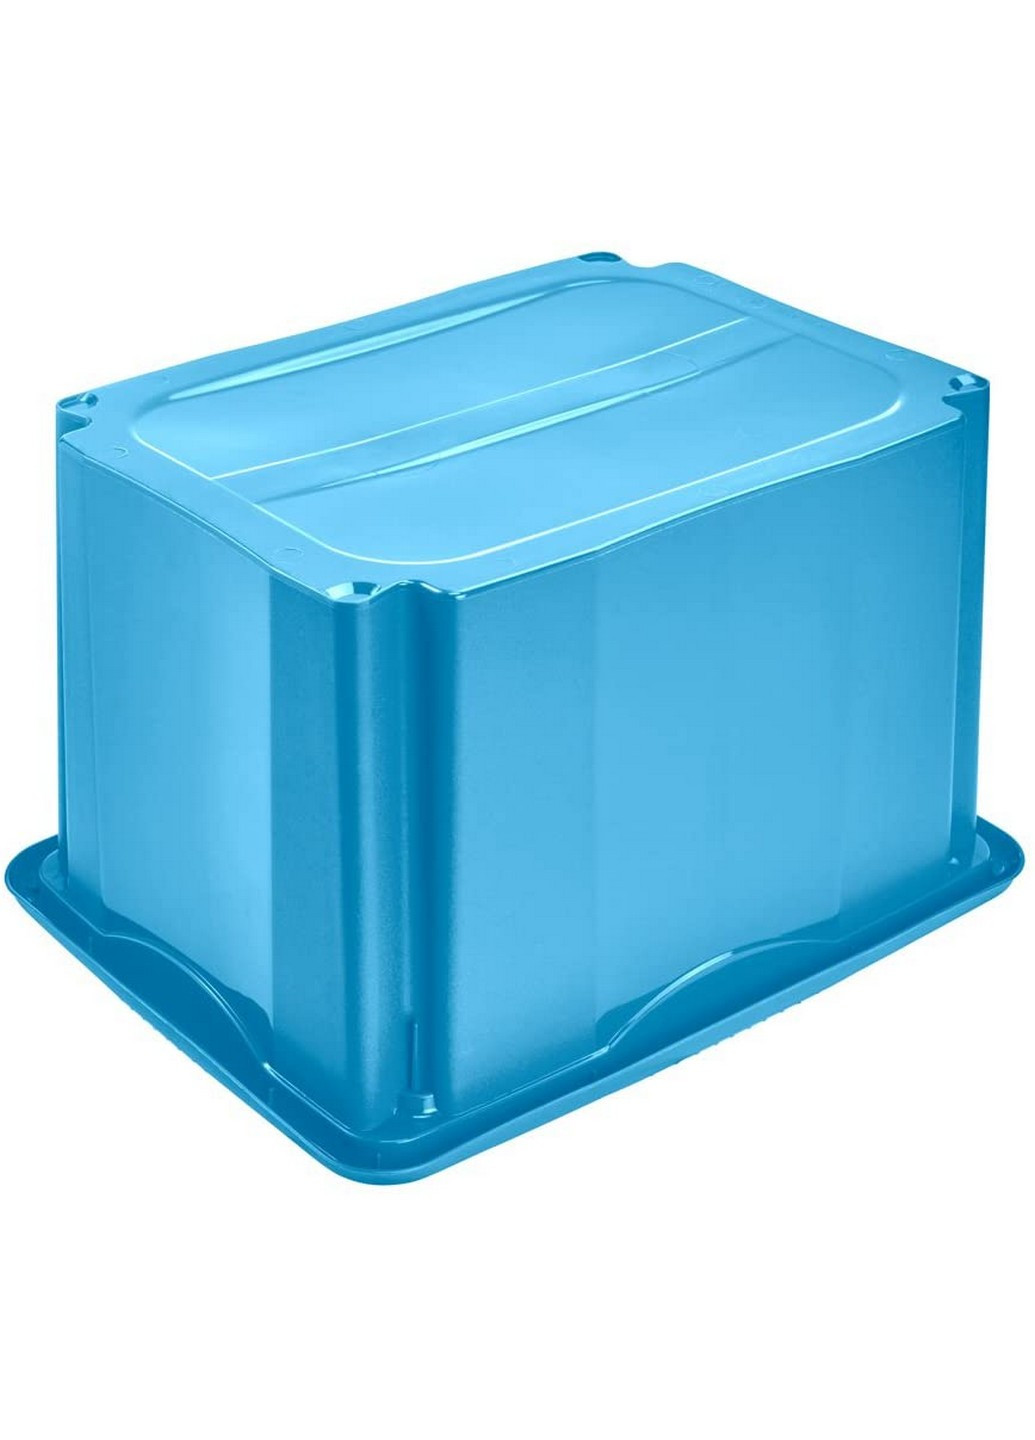 Ящик для хранения Emil 30 л синий (КЕЕ-516.1) Keeeper (217310123)